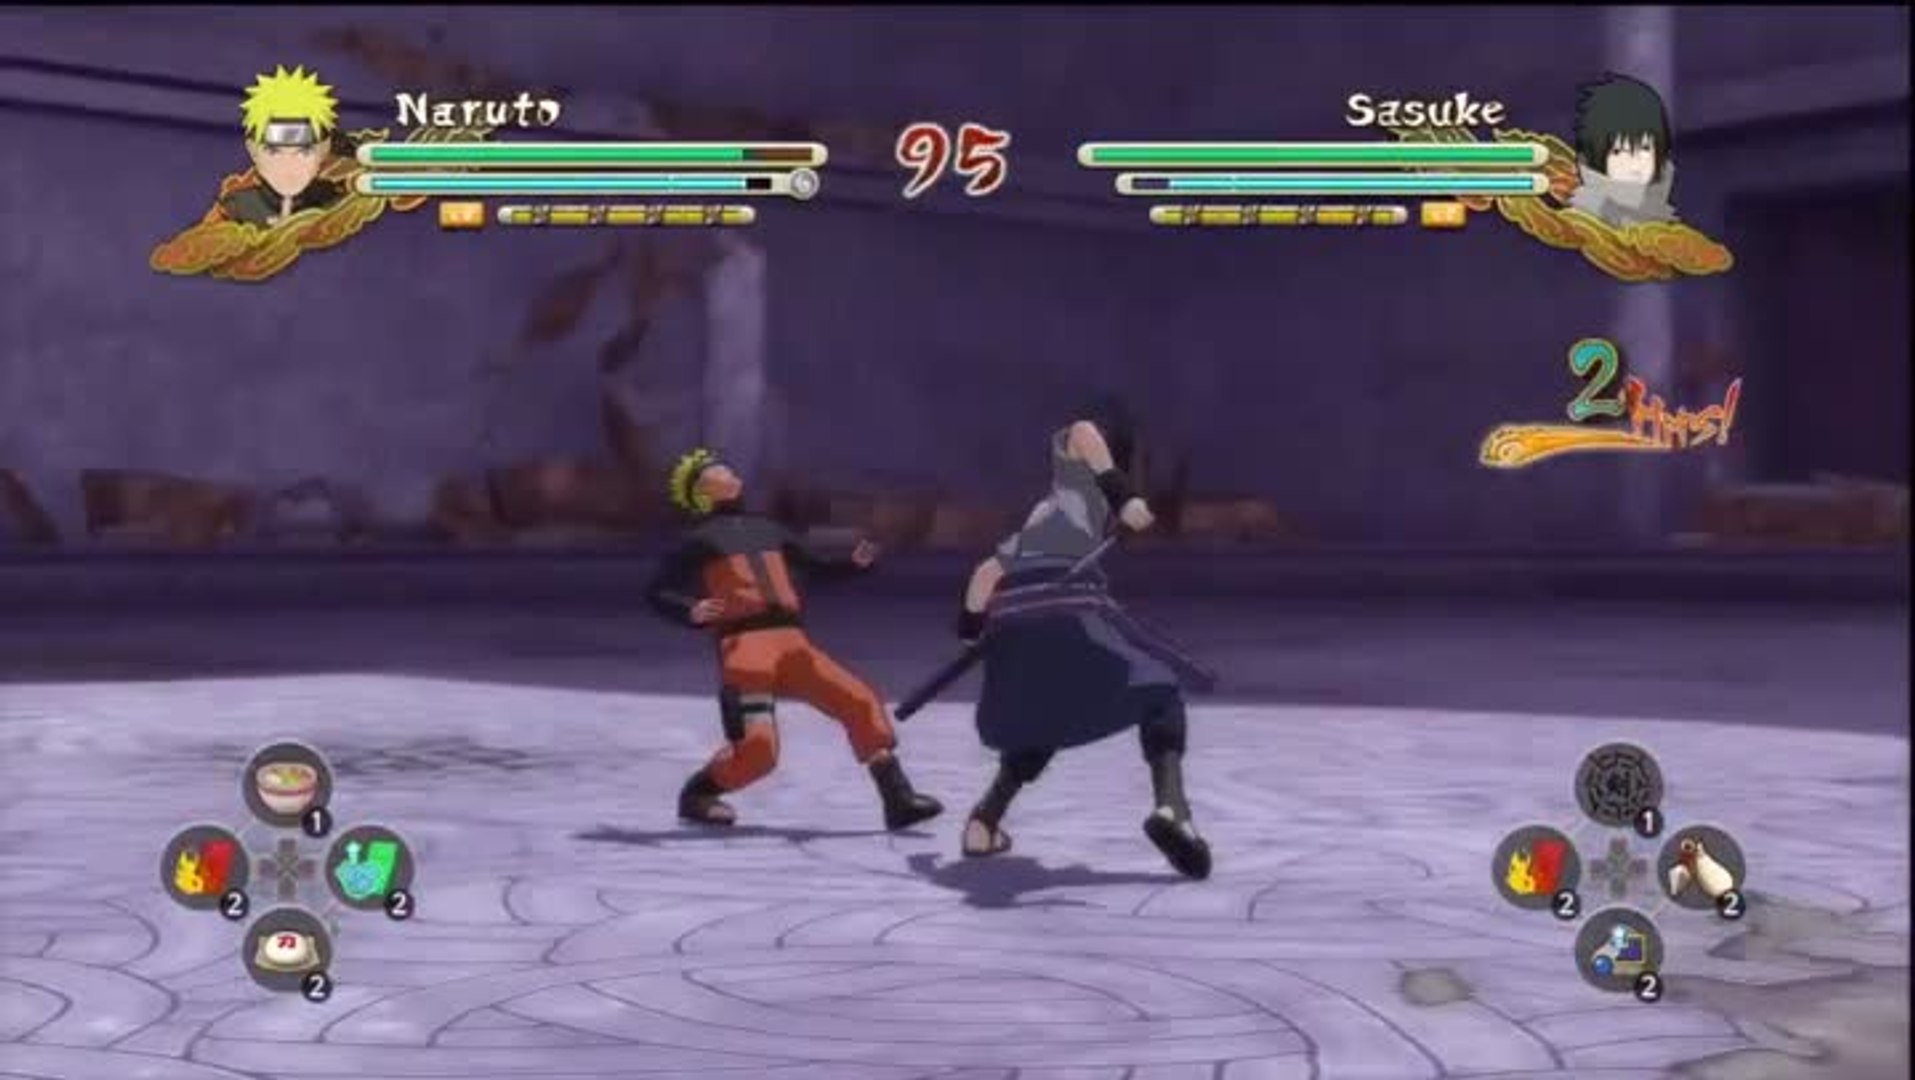 Naruto vs sasuke, Ultimate ninja storm 3, Naruto vs sasuke